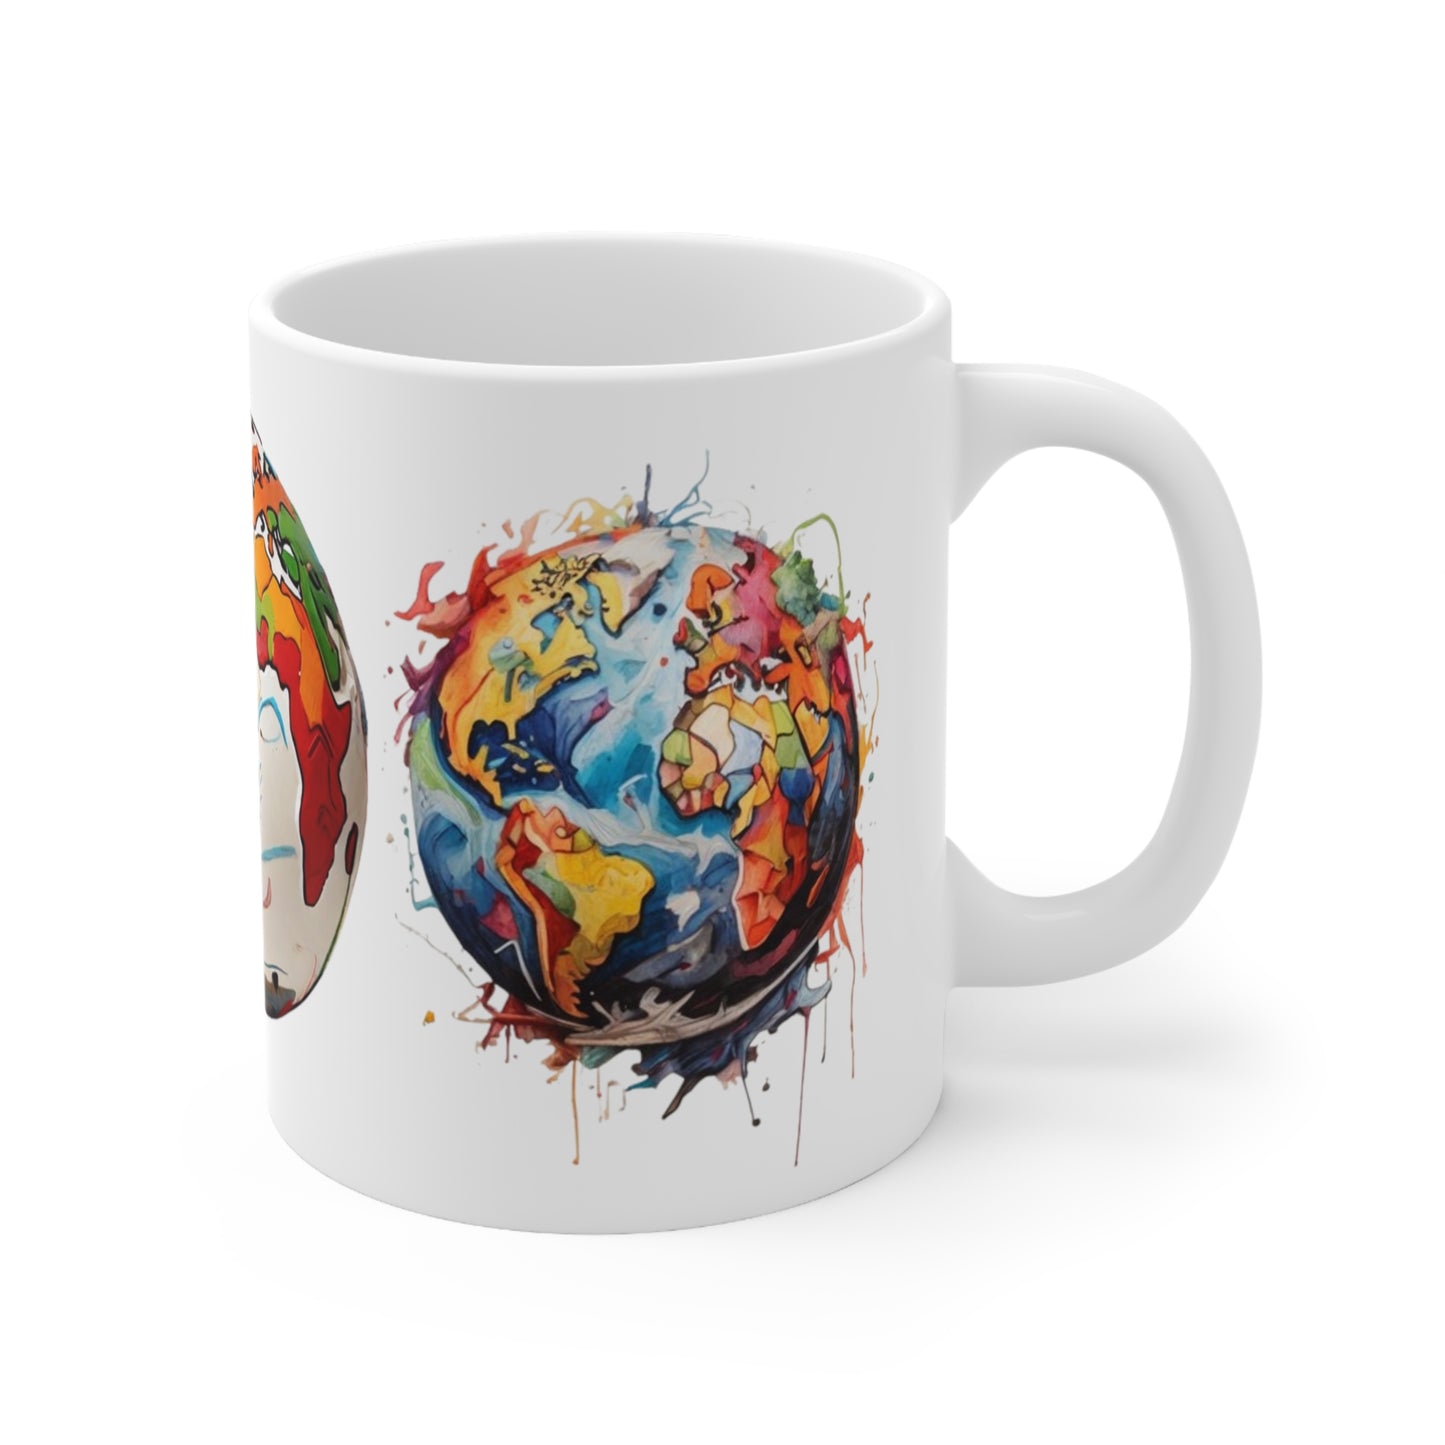 Messy Colourful World Globe Mug - Ceramic Coffee Mug 11oz